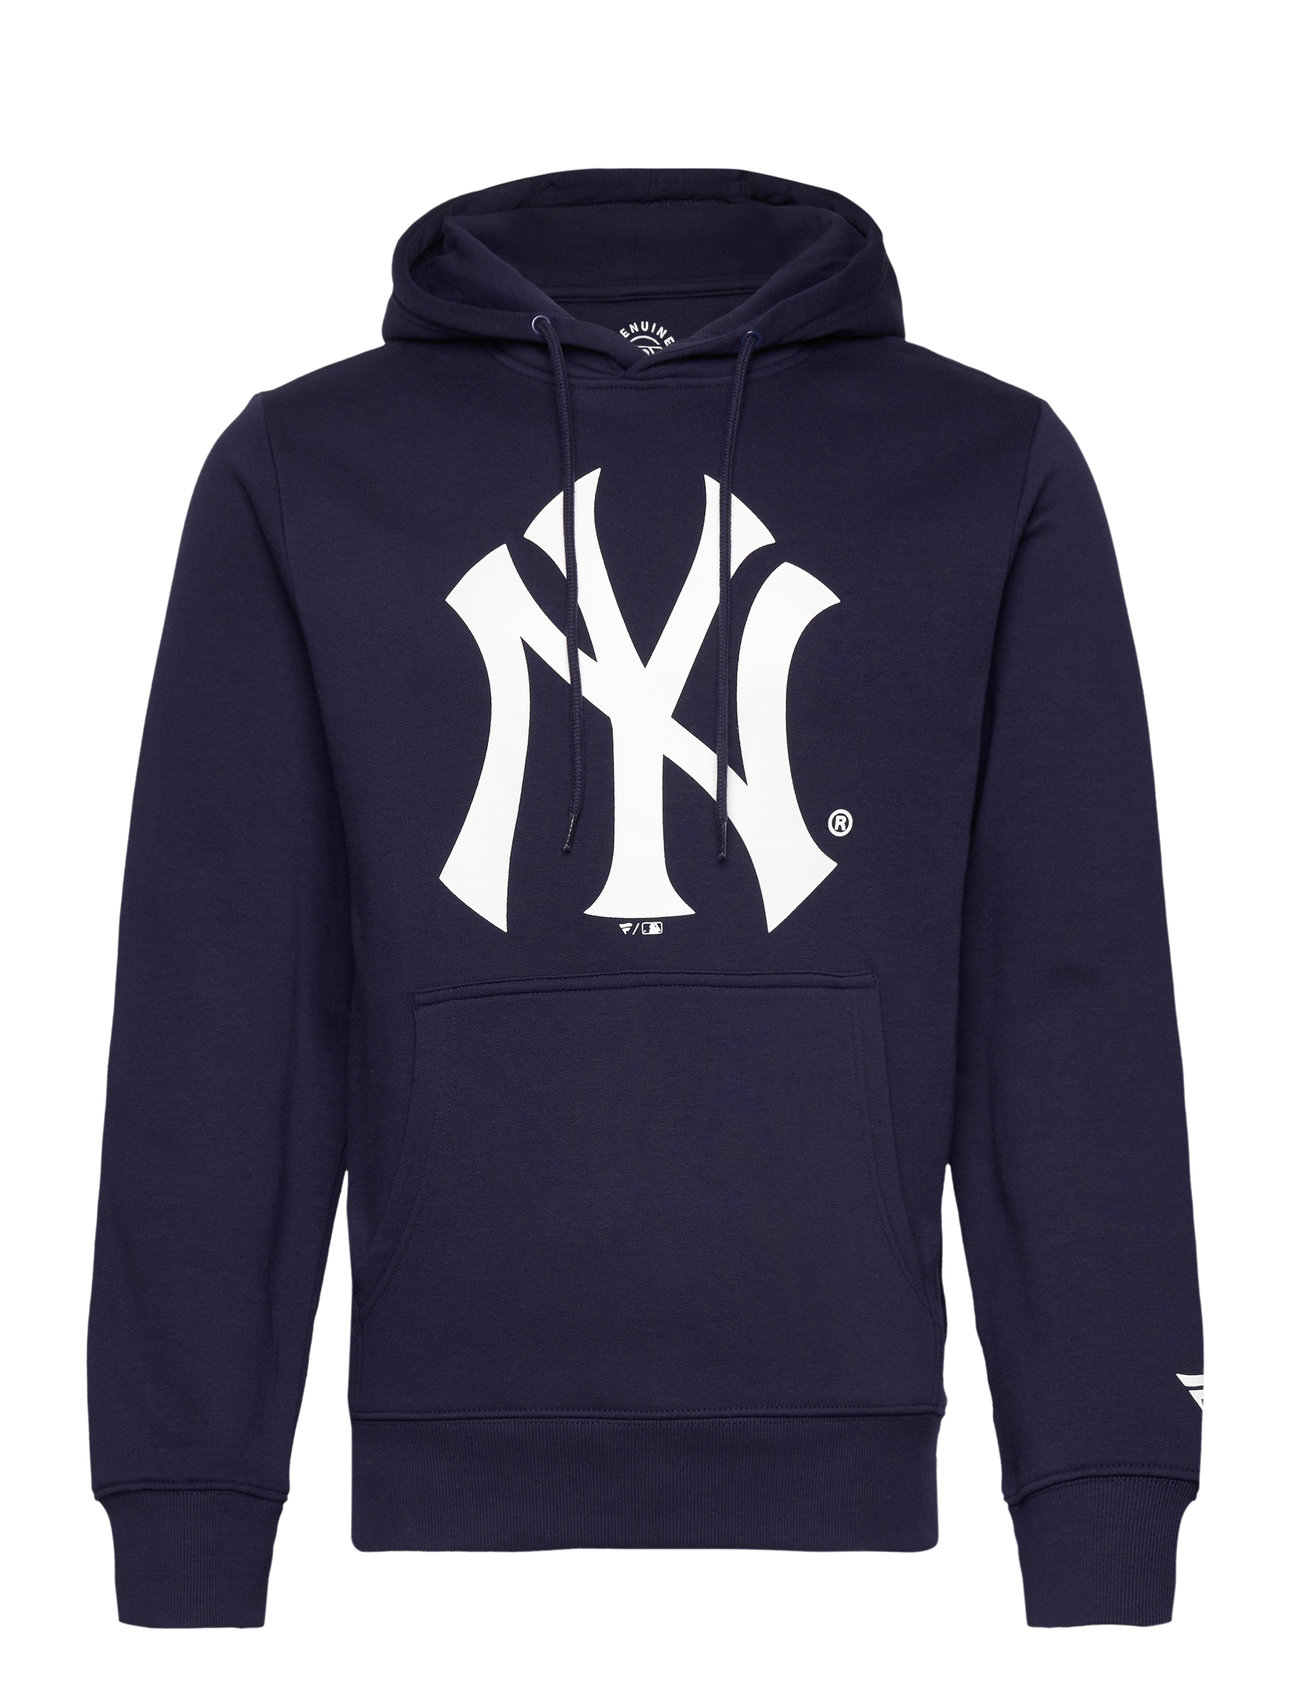 New York Yankees Primary Logo Graphic Hoodie Tops Sweatshirts & Hoodies Hoodies Navy Fanatics